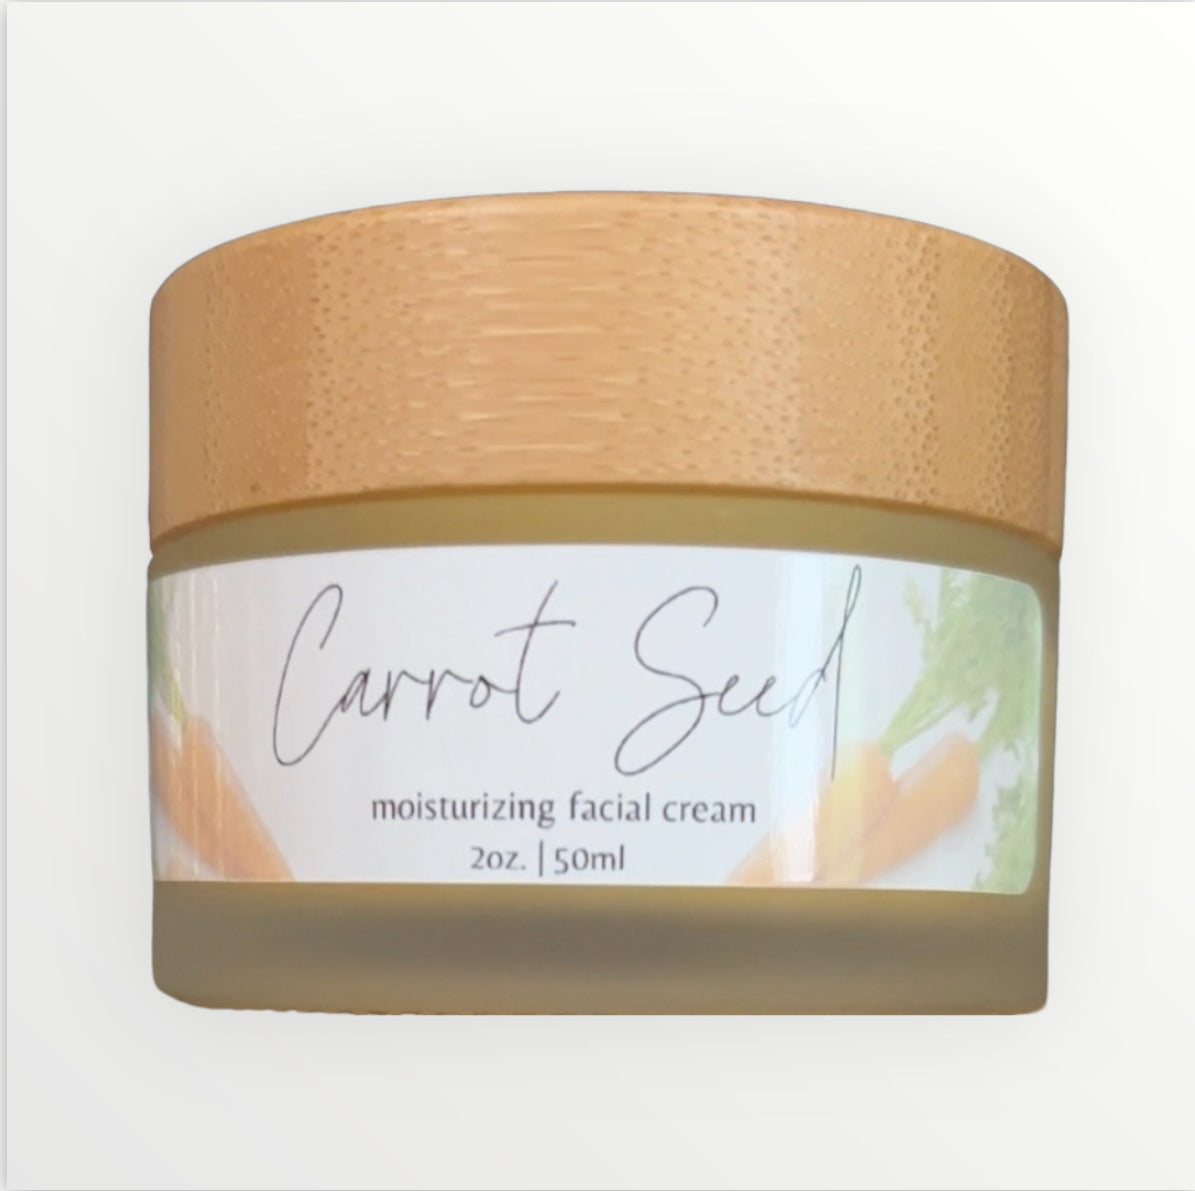 Carrot Seed Facial Cream Moisturizer